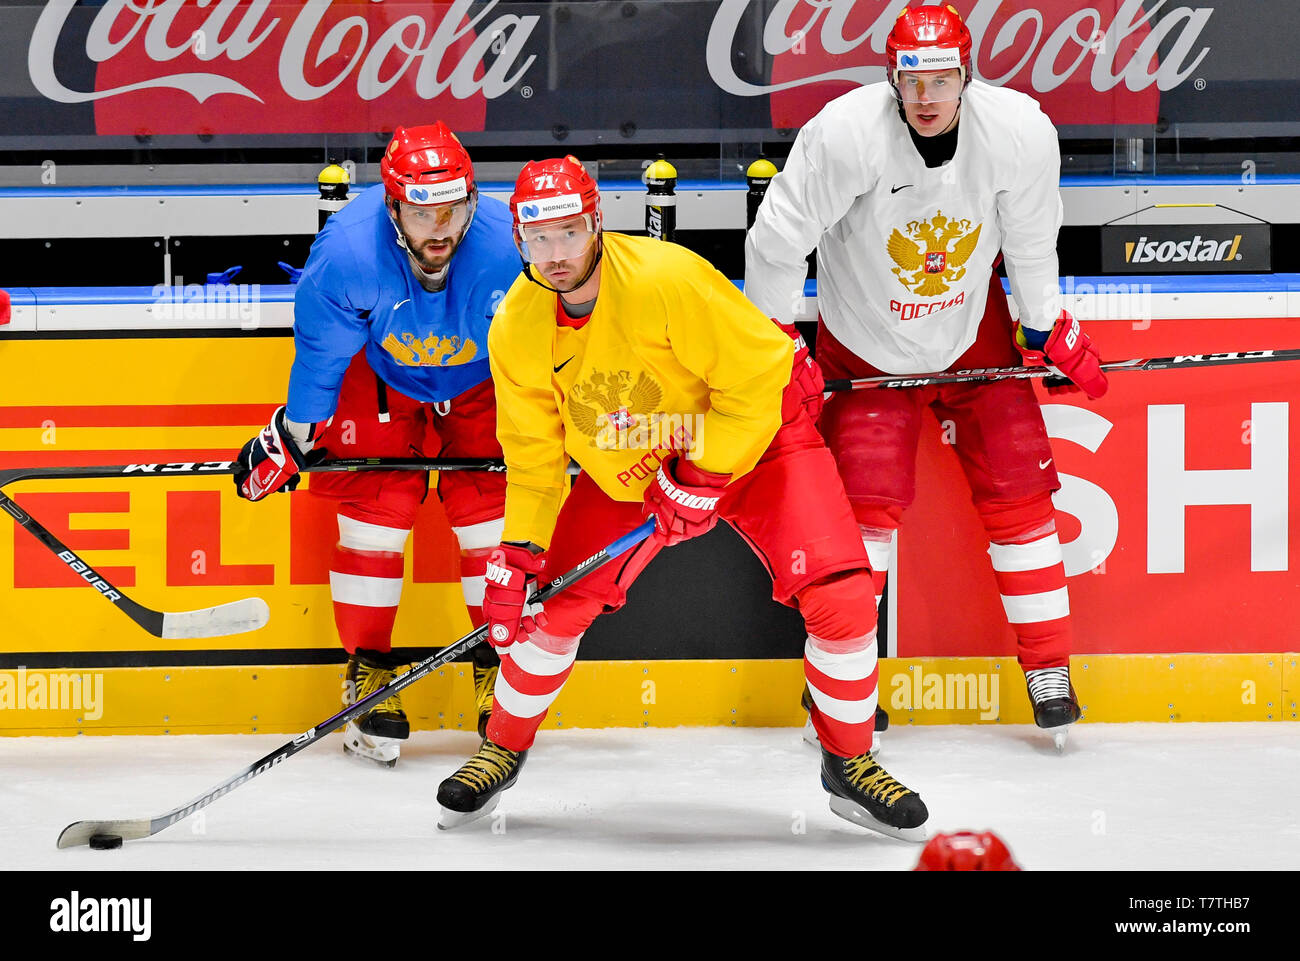 Russian Ice Hockey Players Alexander Ovechkin Ilya Kovalchuk And Evgeni Malkin Attend A